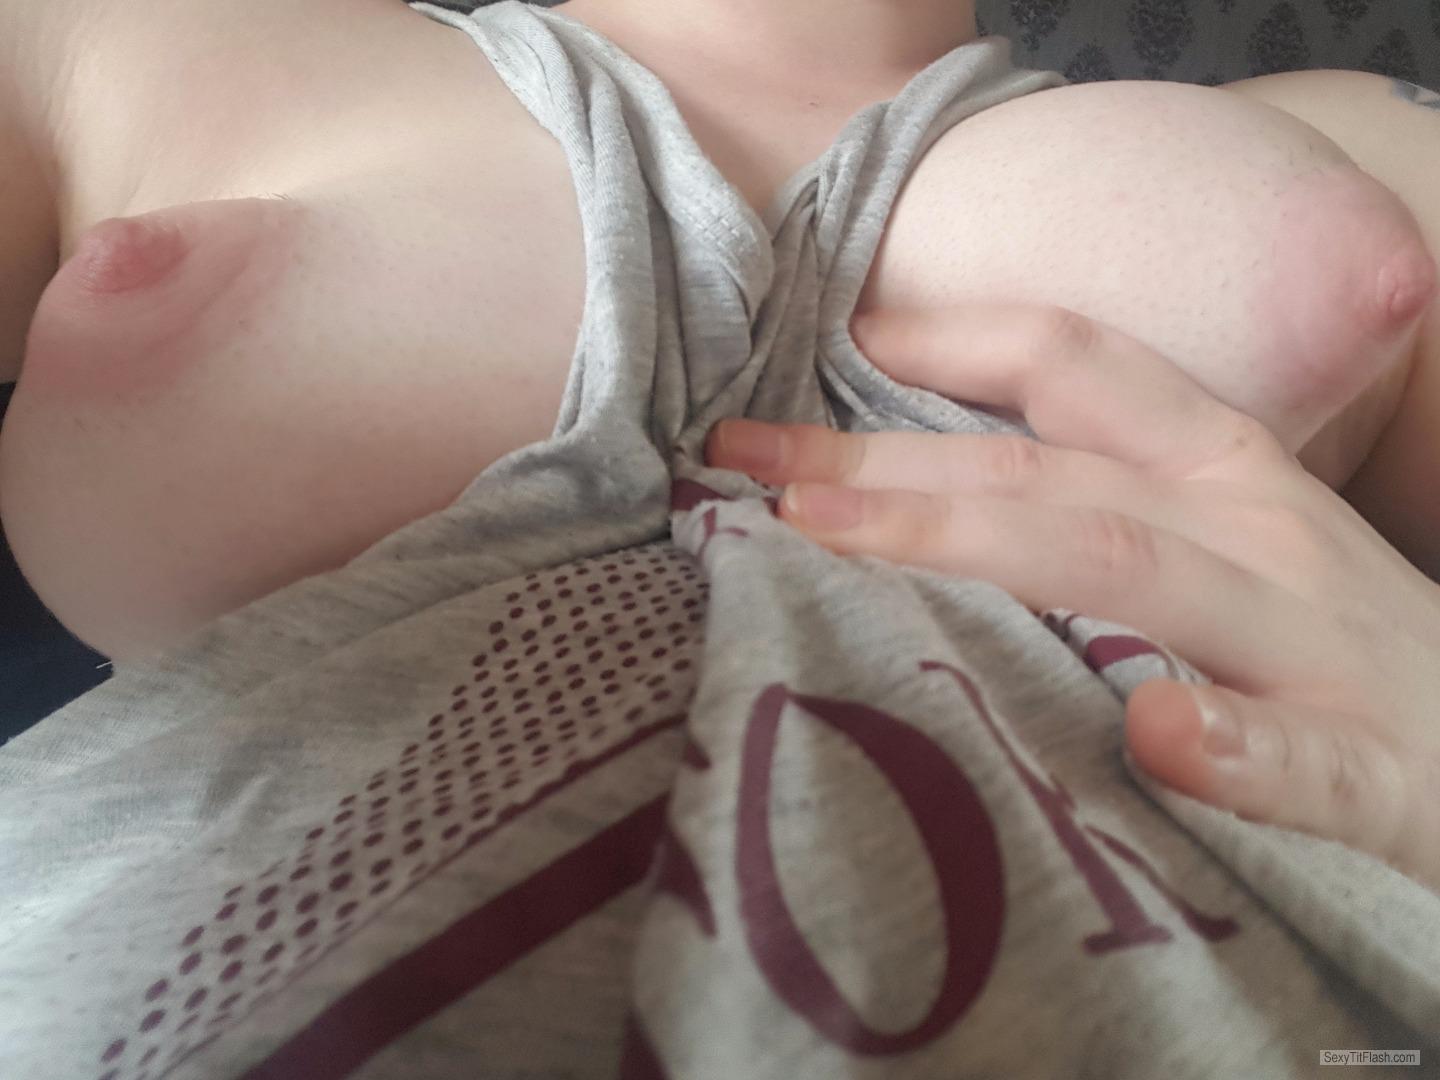 Tit Flash: My Big Tits (Selfie) - Badalice from Germany